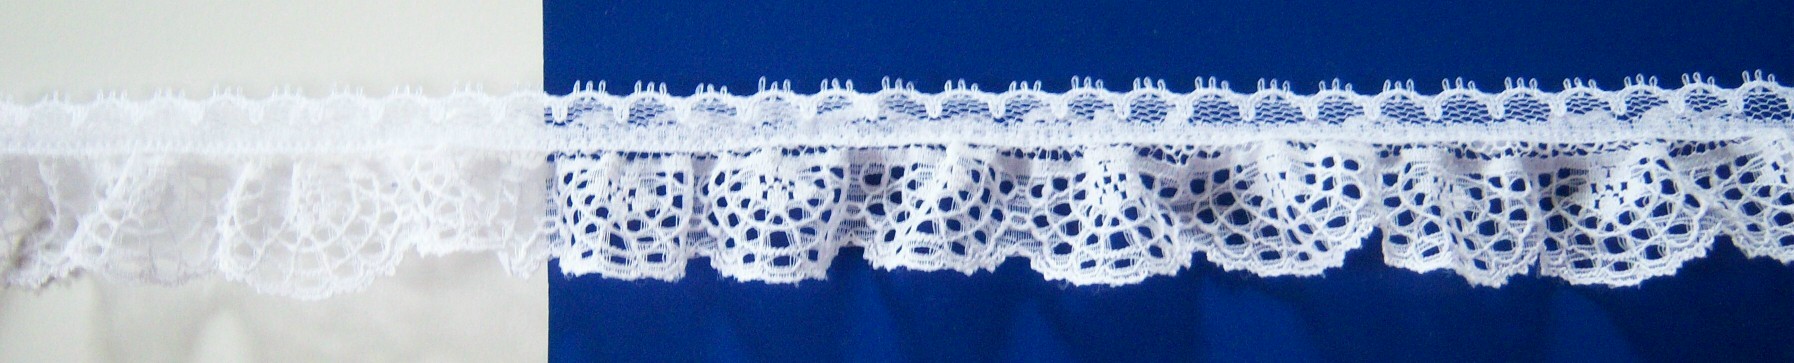 White 1 1/8" Ruffled Lace